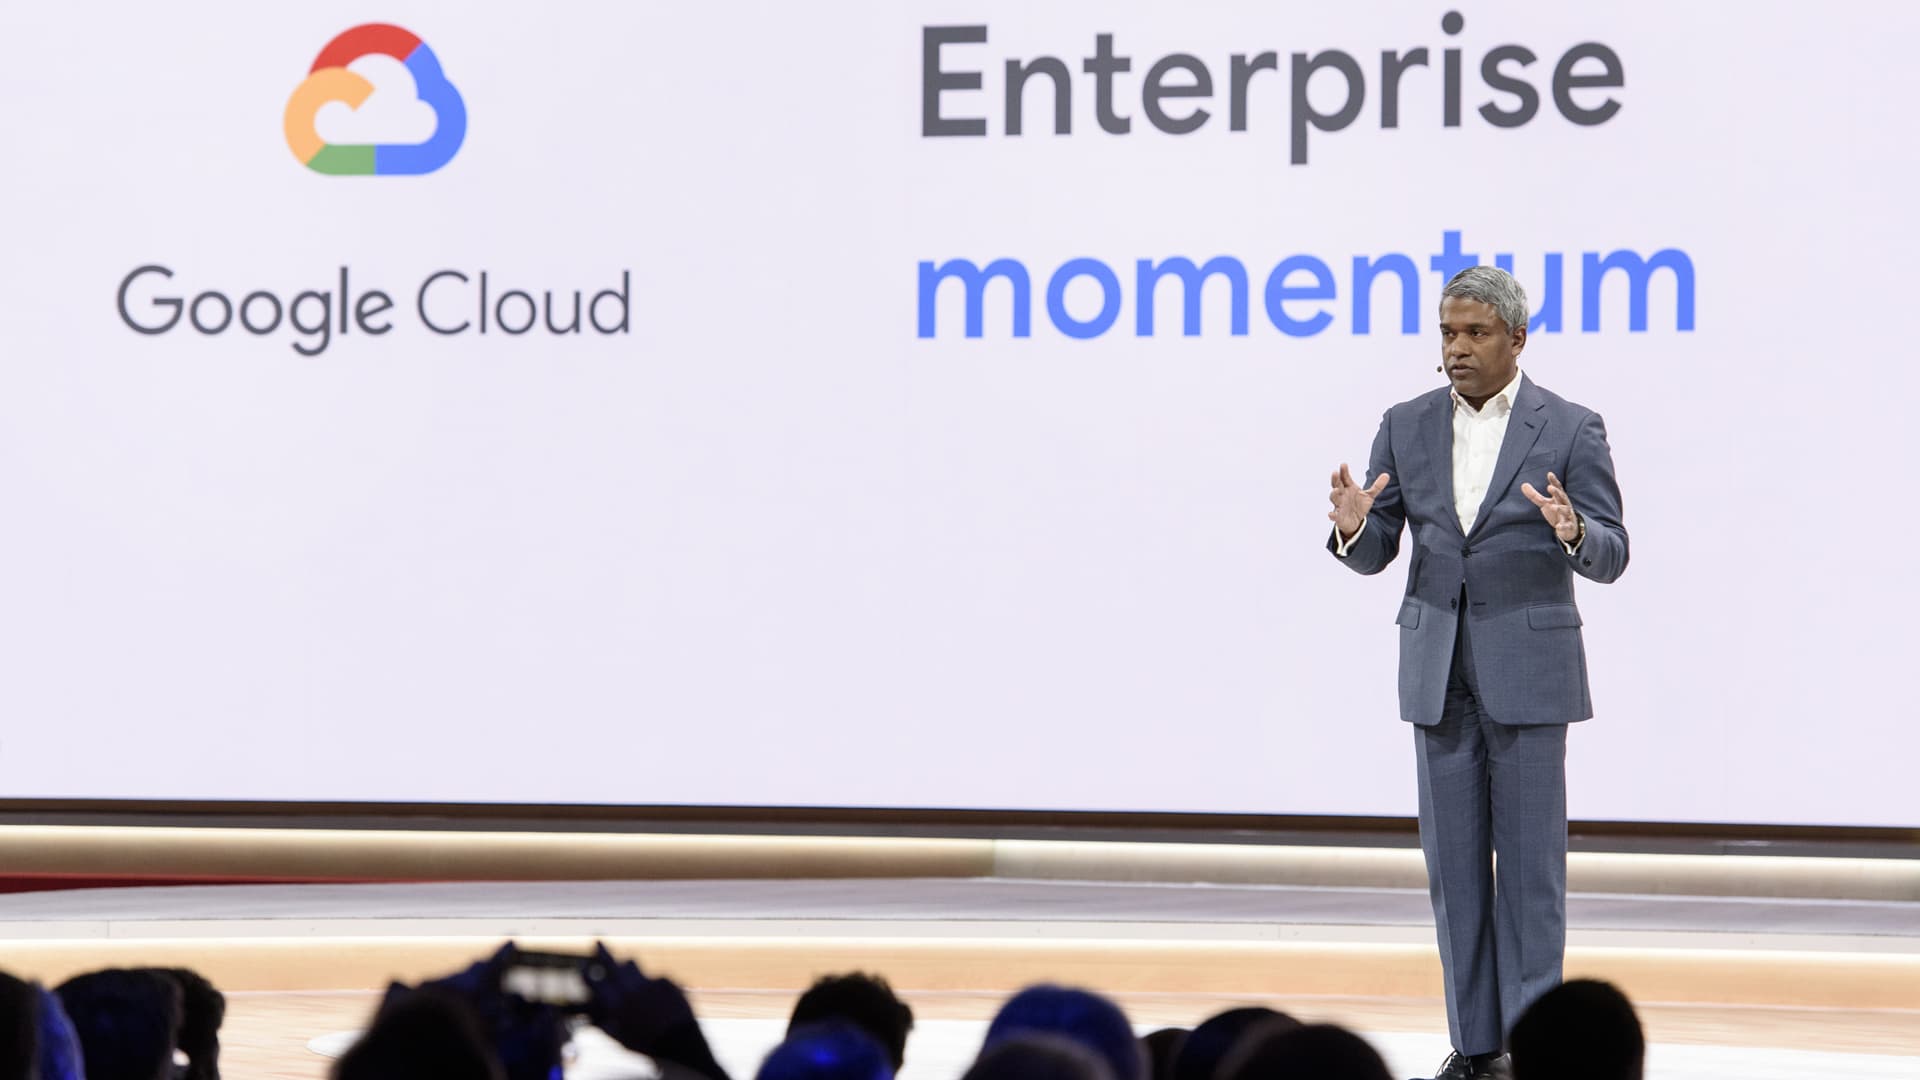 Google accuses Microsoft of unfair practices in Azure cloud unit